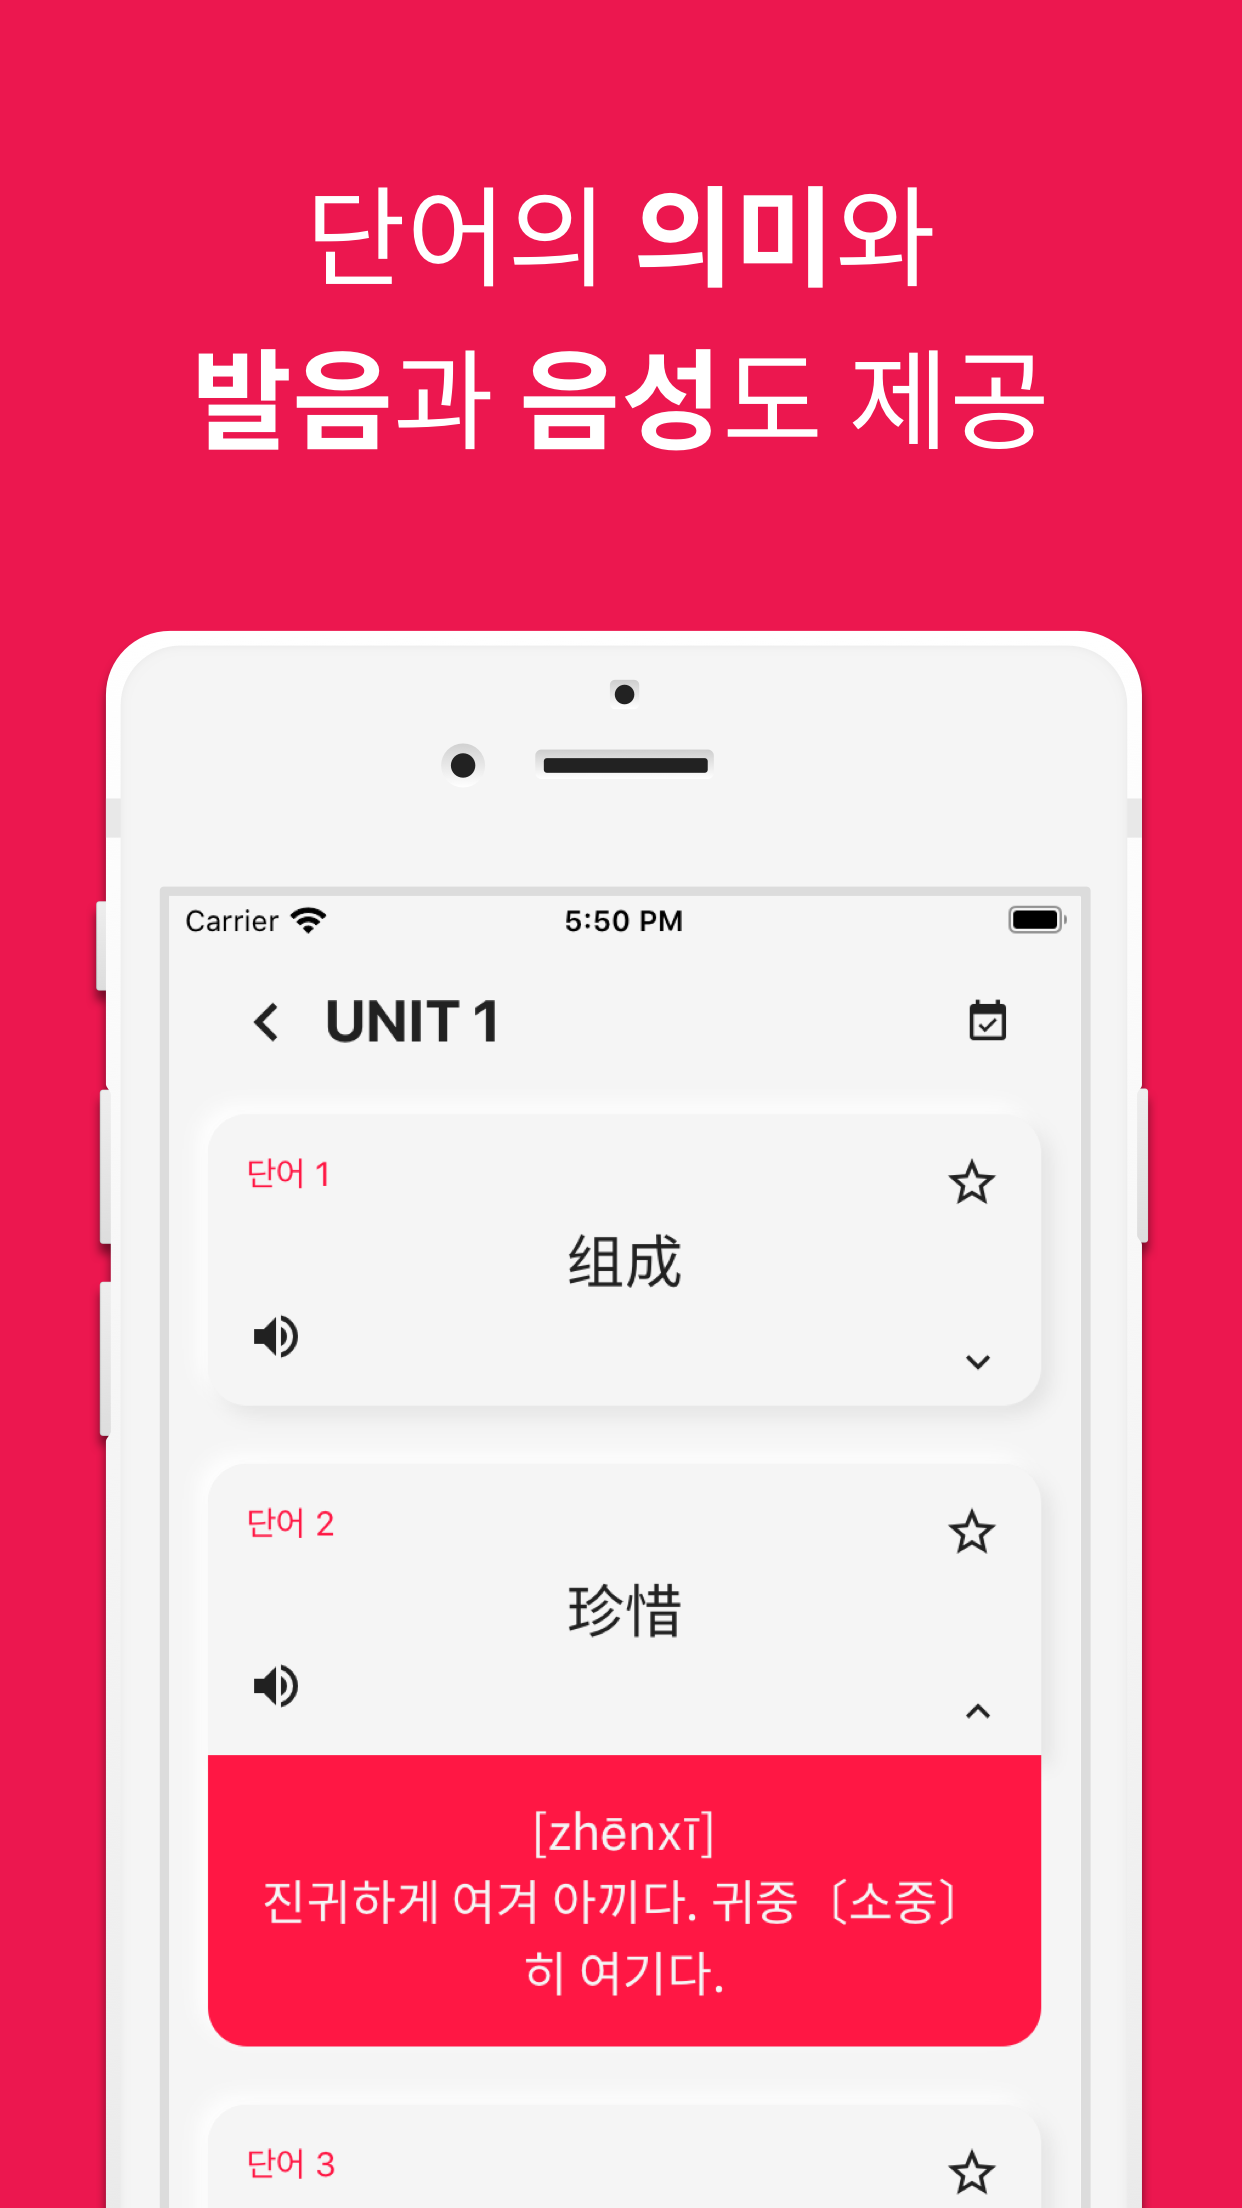 HSK 중국어 단어앱 - 앱 스크린 샷4